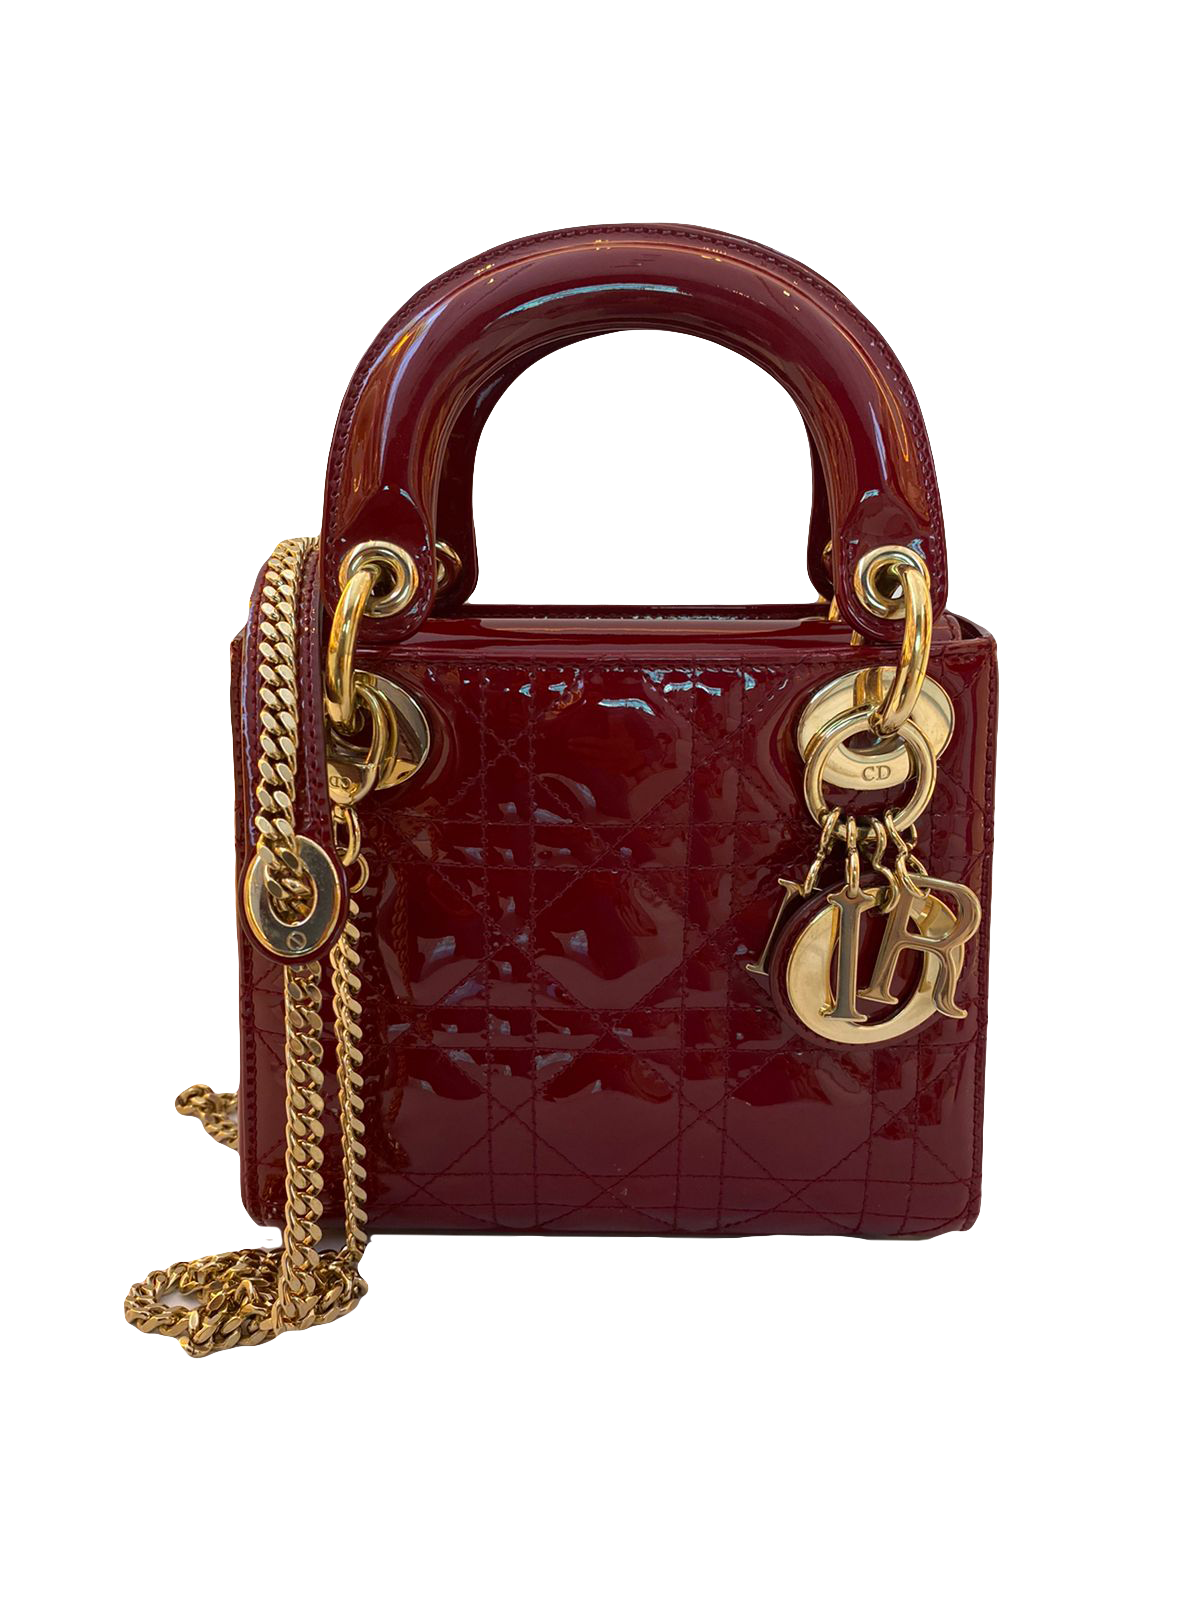 Túi Medium Lady Dior Bag Đỏ cherry bóng cannage calfskin GHW best quality